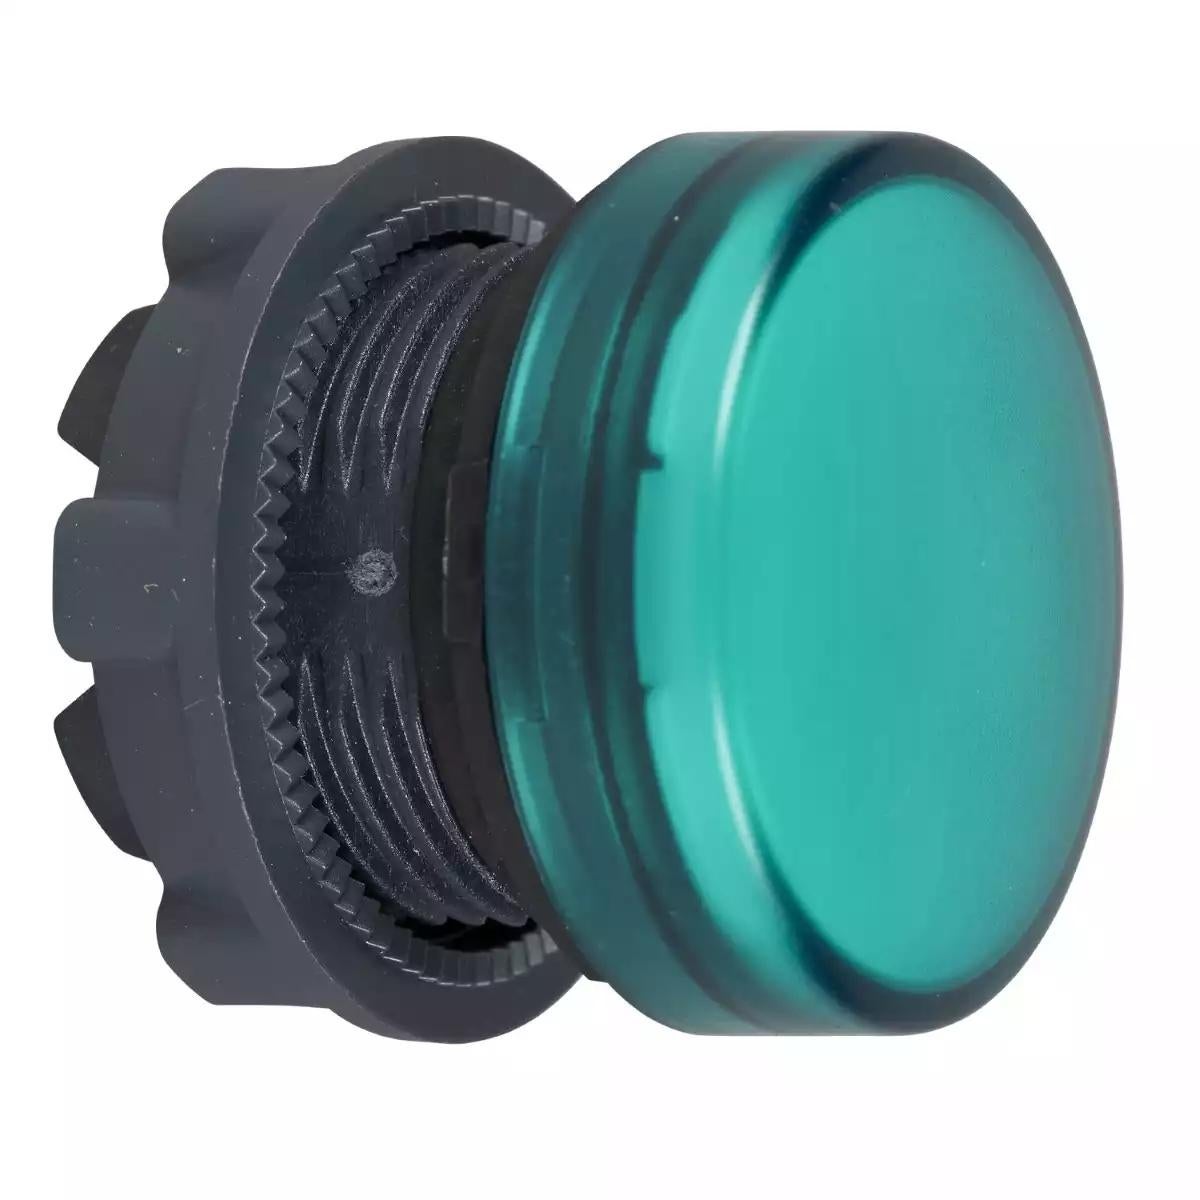 Pilot light head, Harmony XB5, metal, green, 22mm, plain lens for BA9s bulb